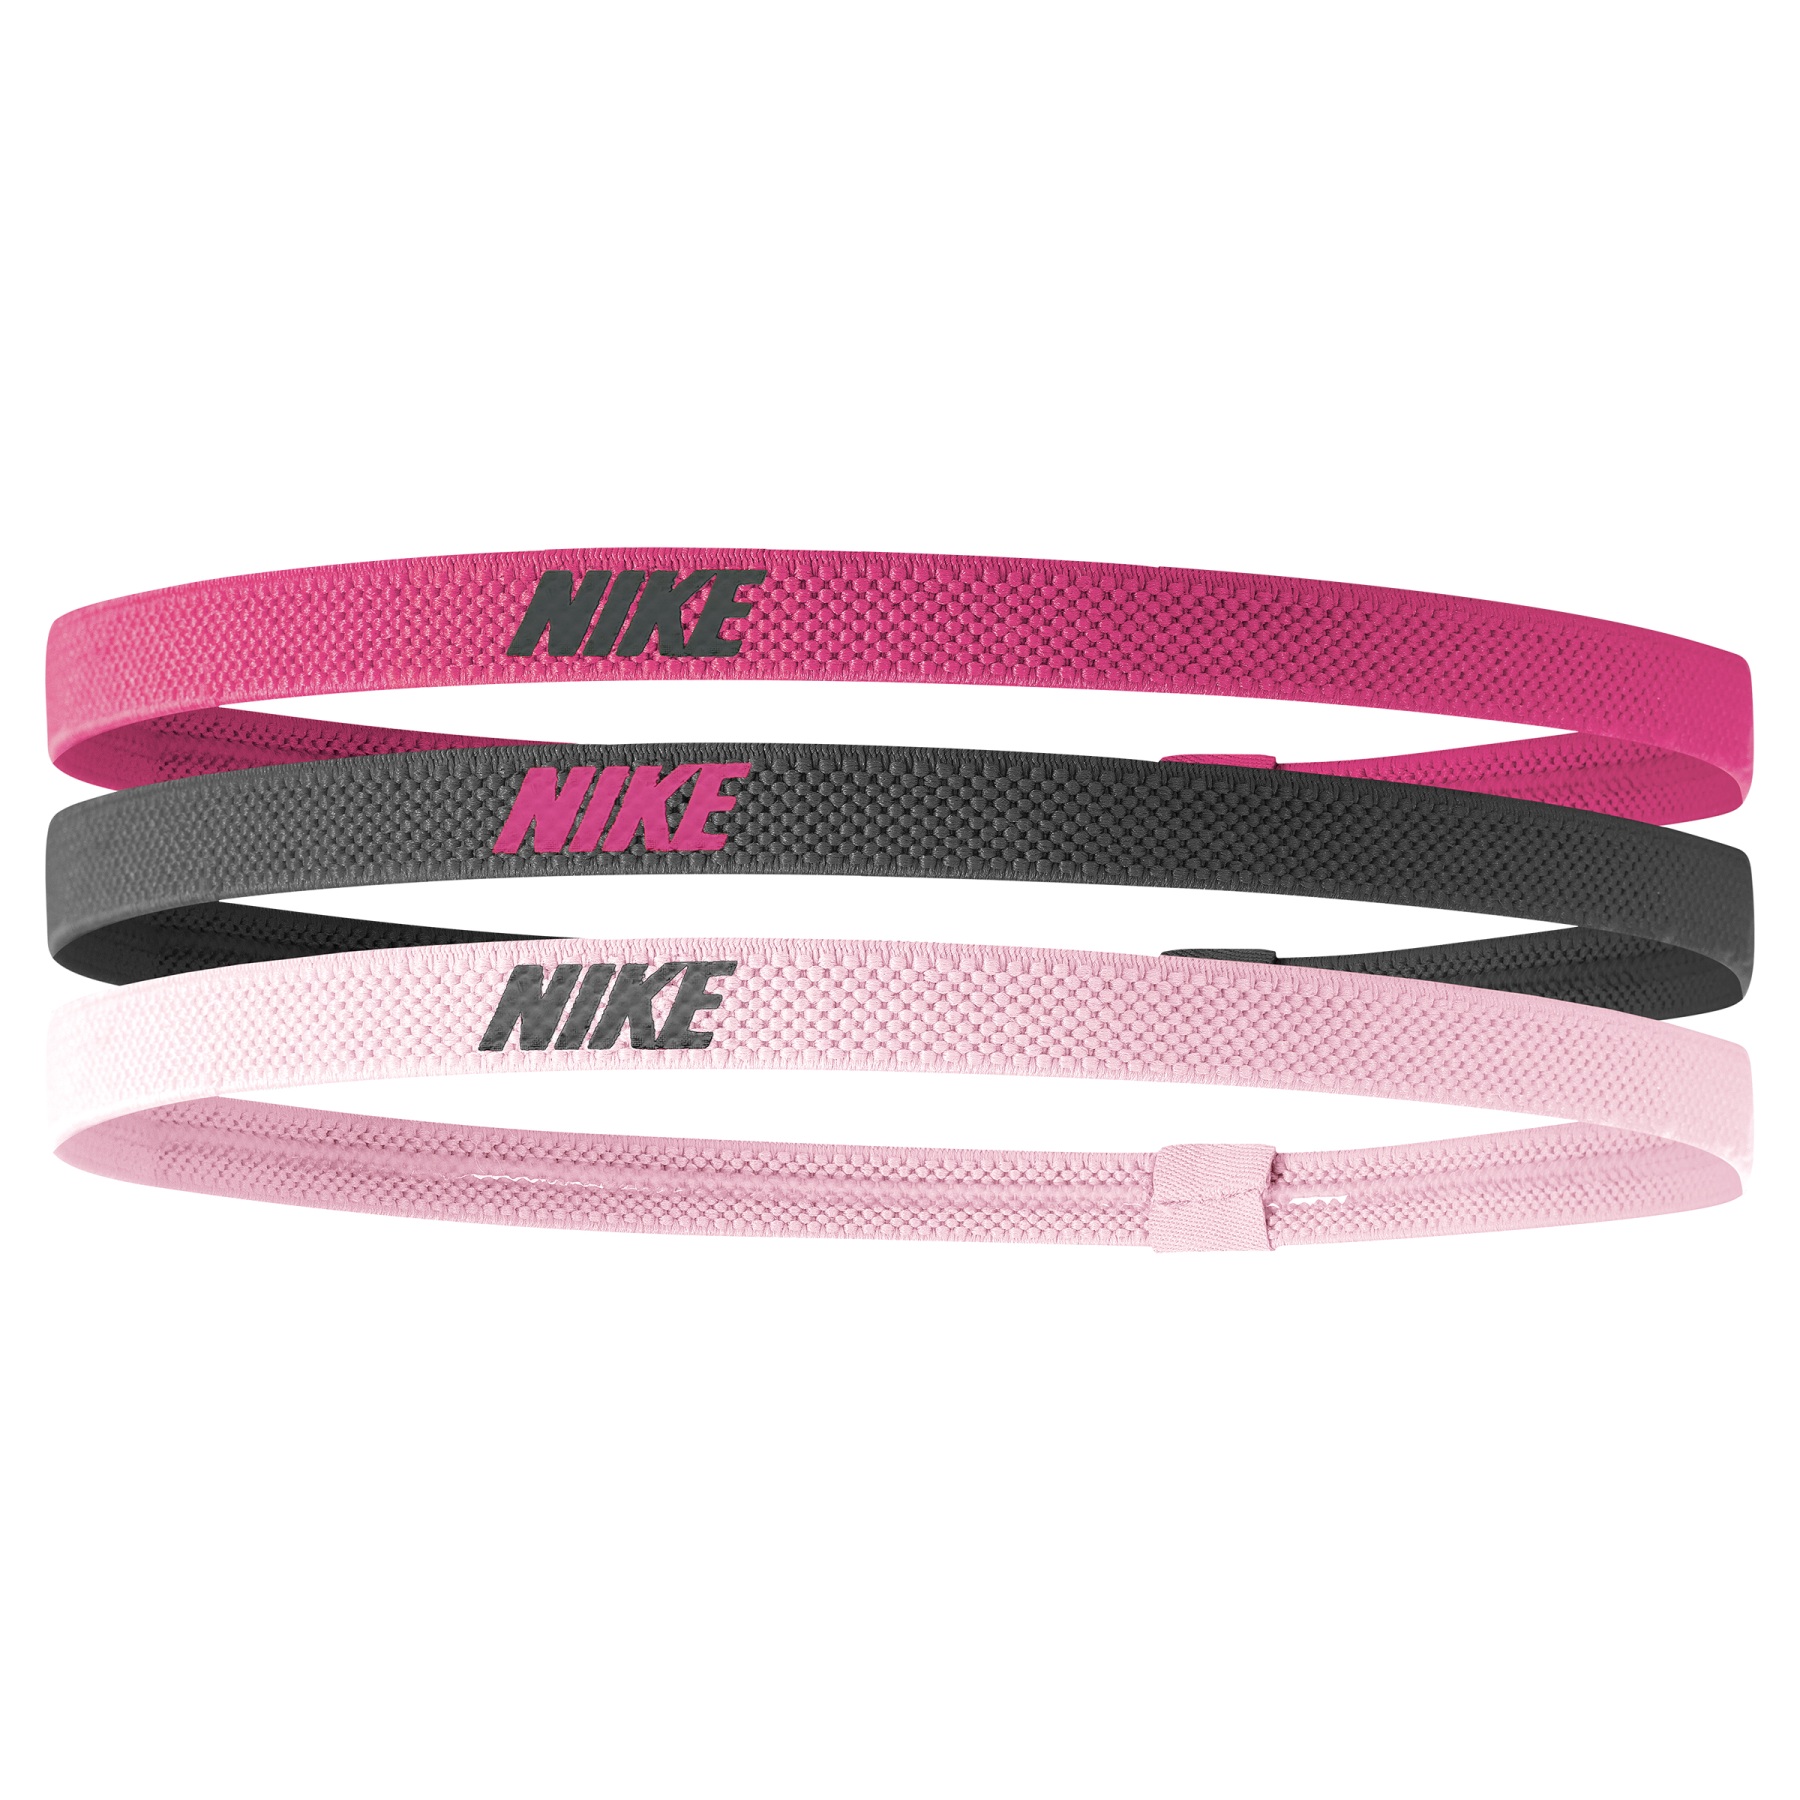 Foto de Nike Elastic Cintas Cabeza 2.0 (Pack de 3) - spark/gridiron/pink glaze 658